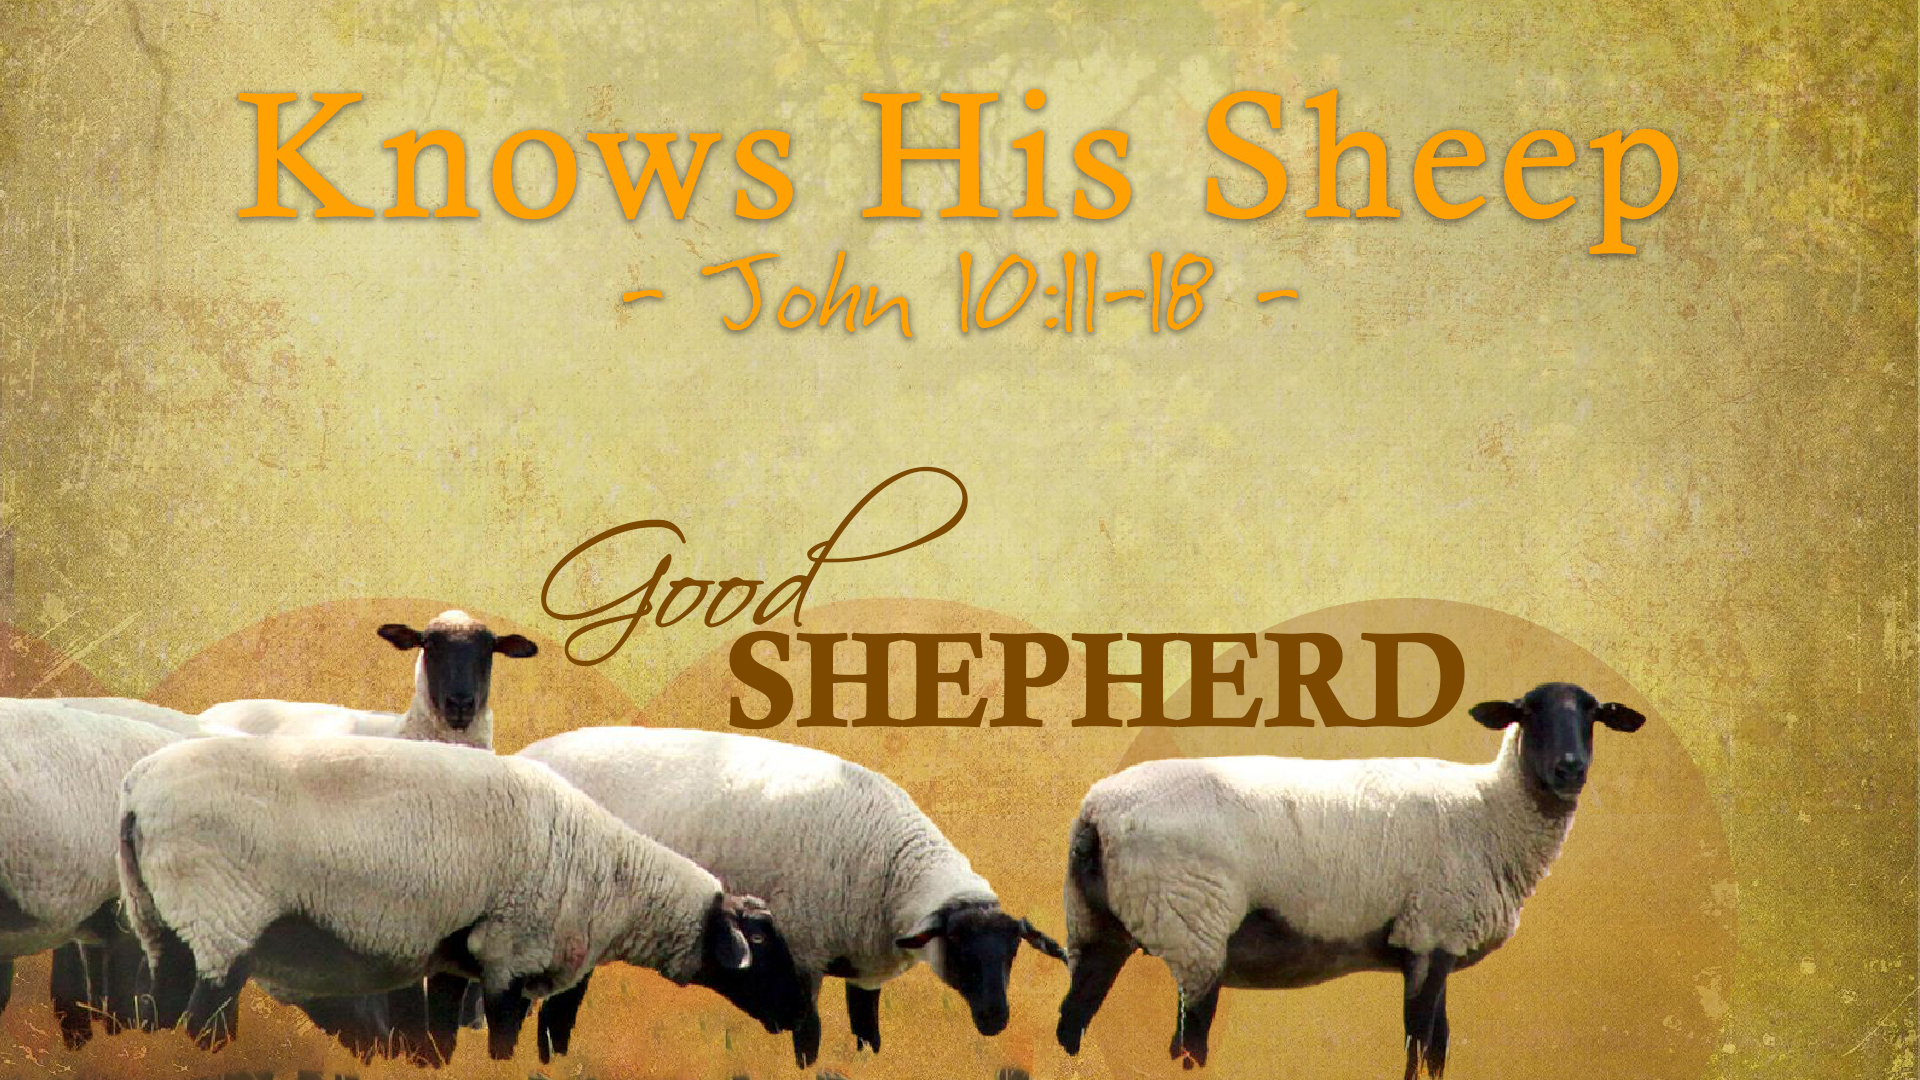  Good Shepherd, part 2: Knows His Sheep  Image